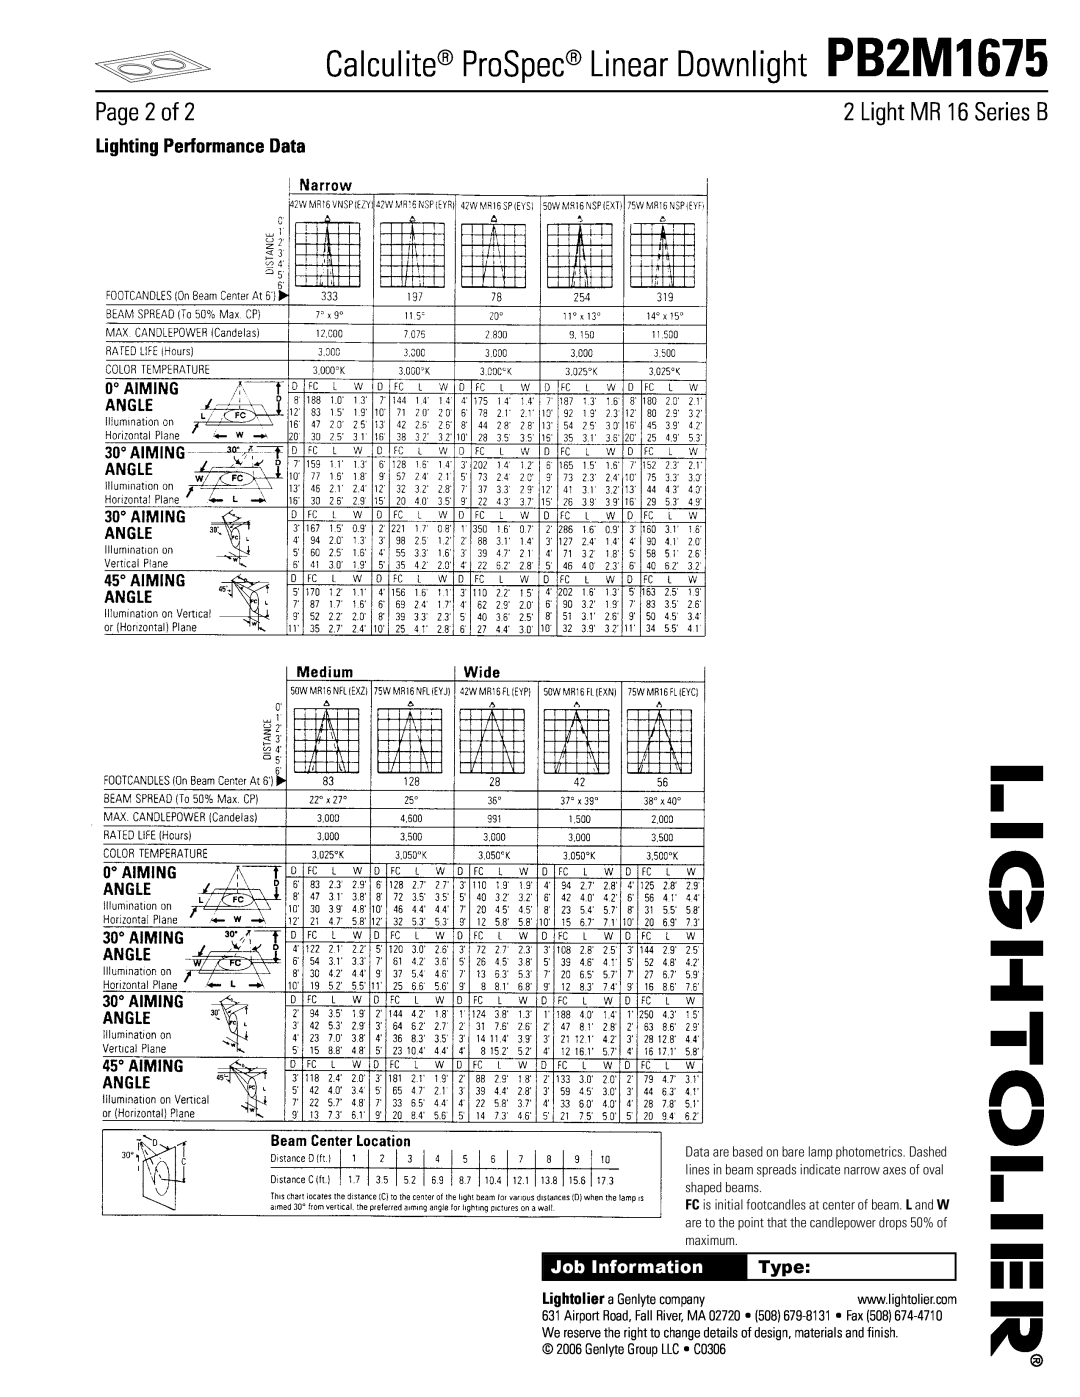 Lightolier PB2M1675 manual Page 2 of, Light MR 16 Series B, Lighting Performance Data, Job Information, Type 